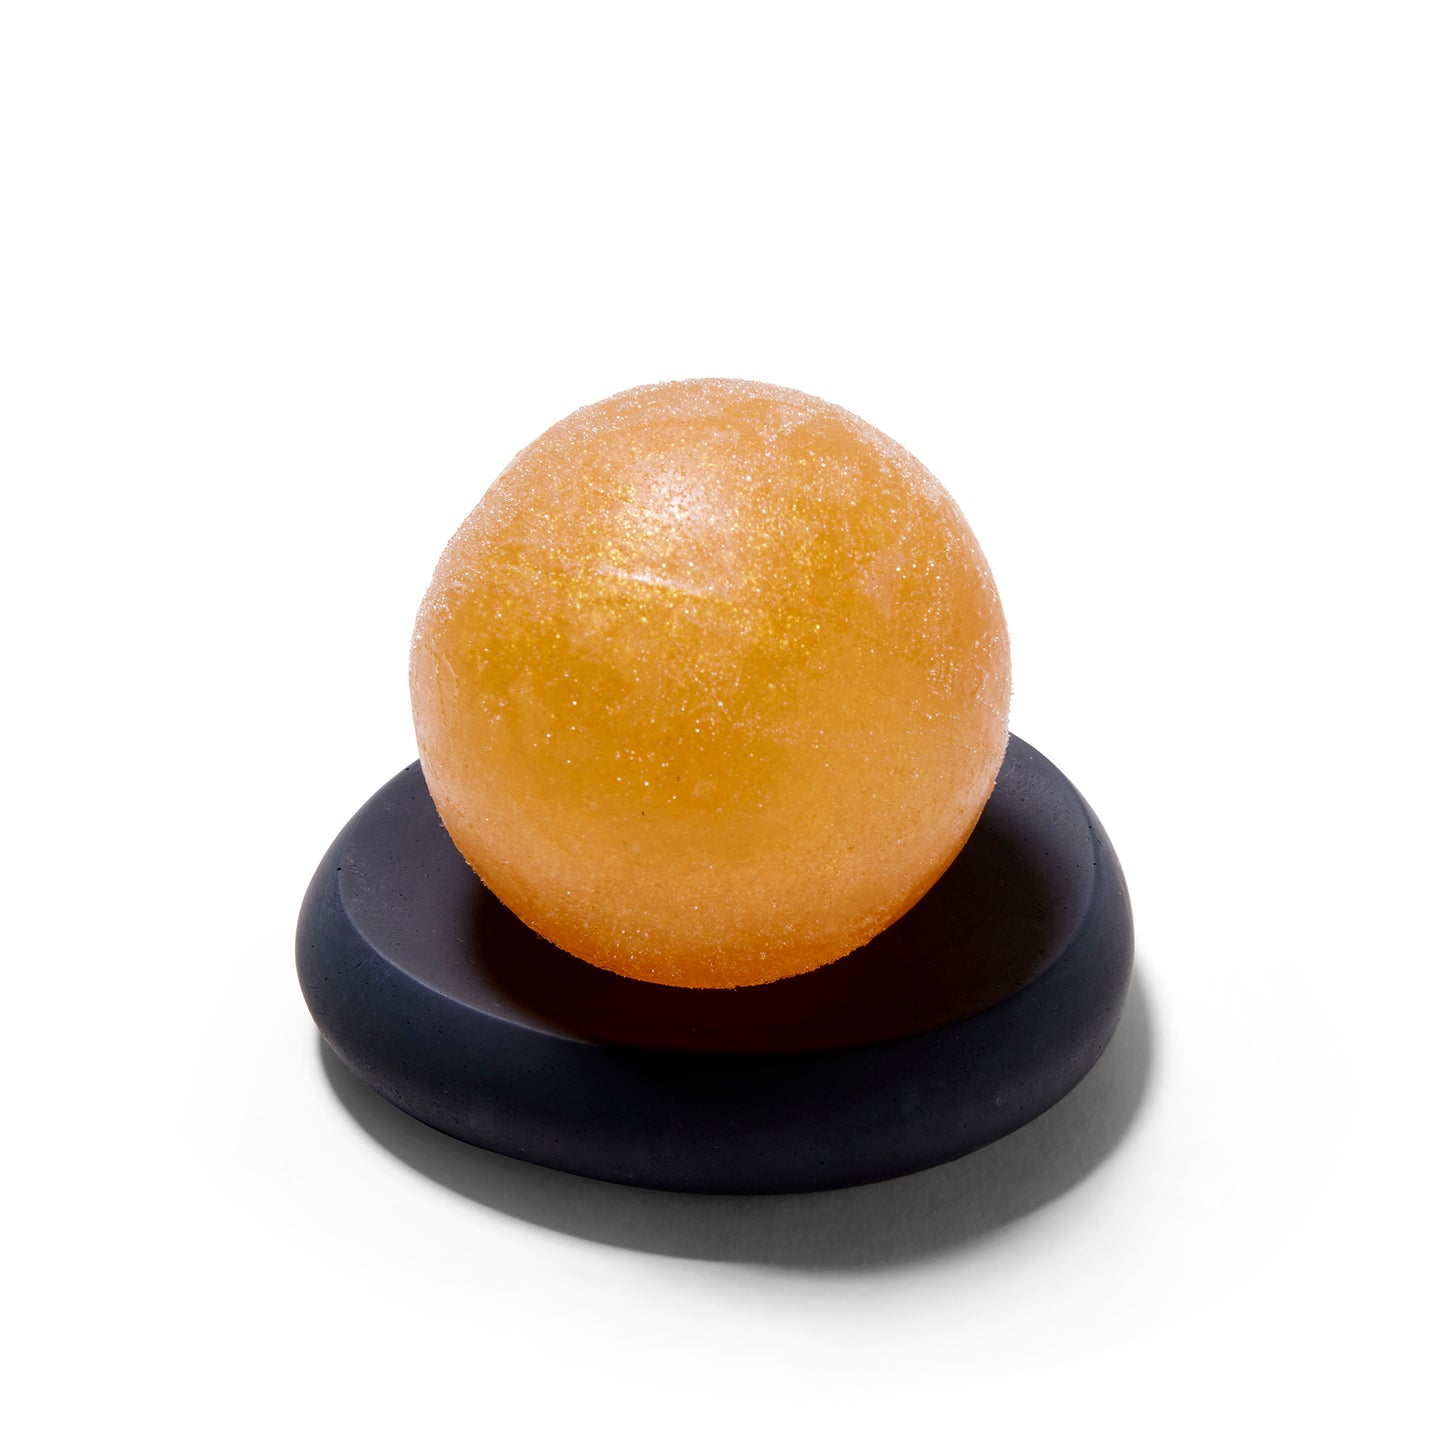 The Mitmo concrete soap dish matte black concave dish with a gold sphere soap on it.